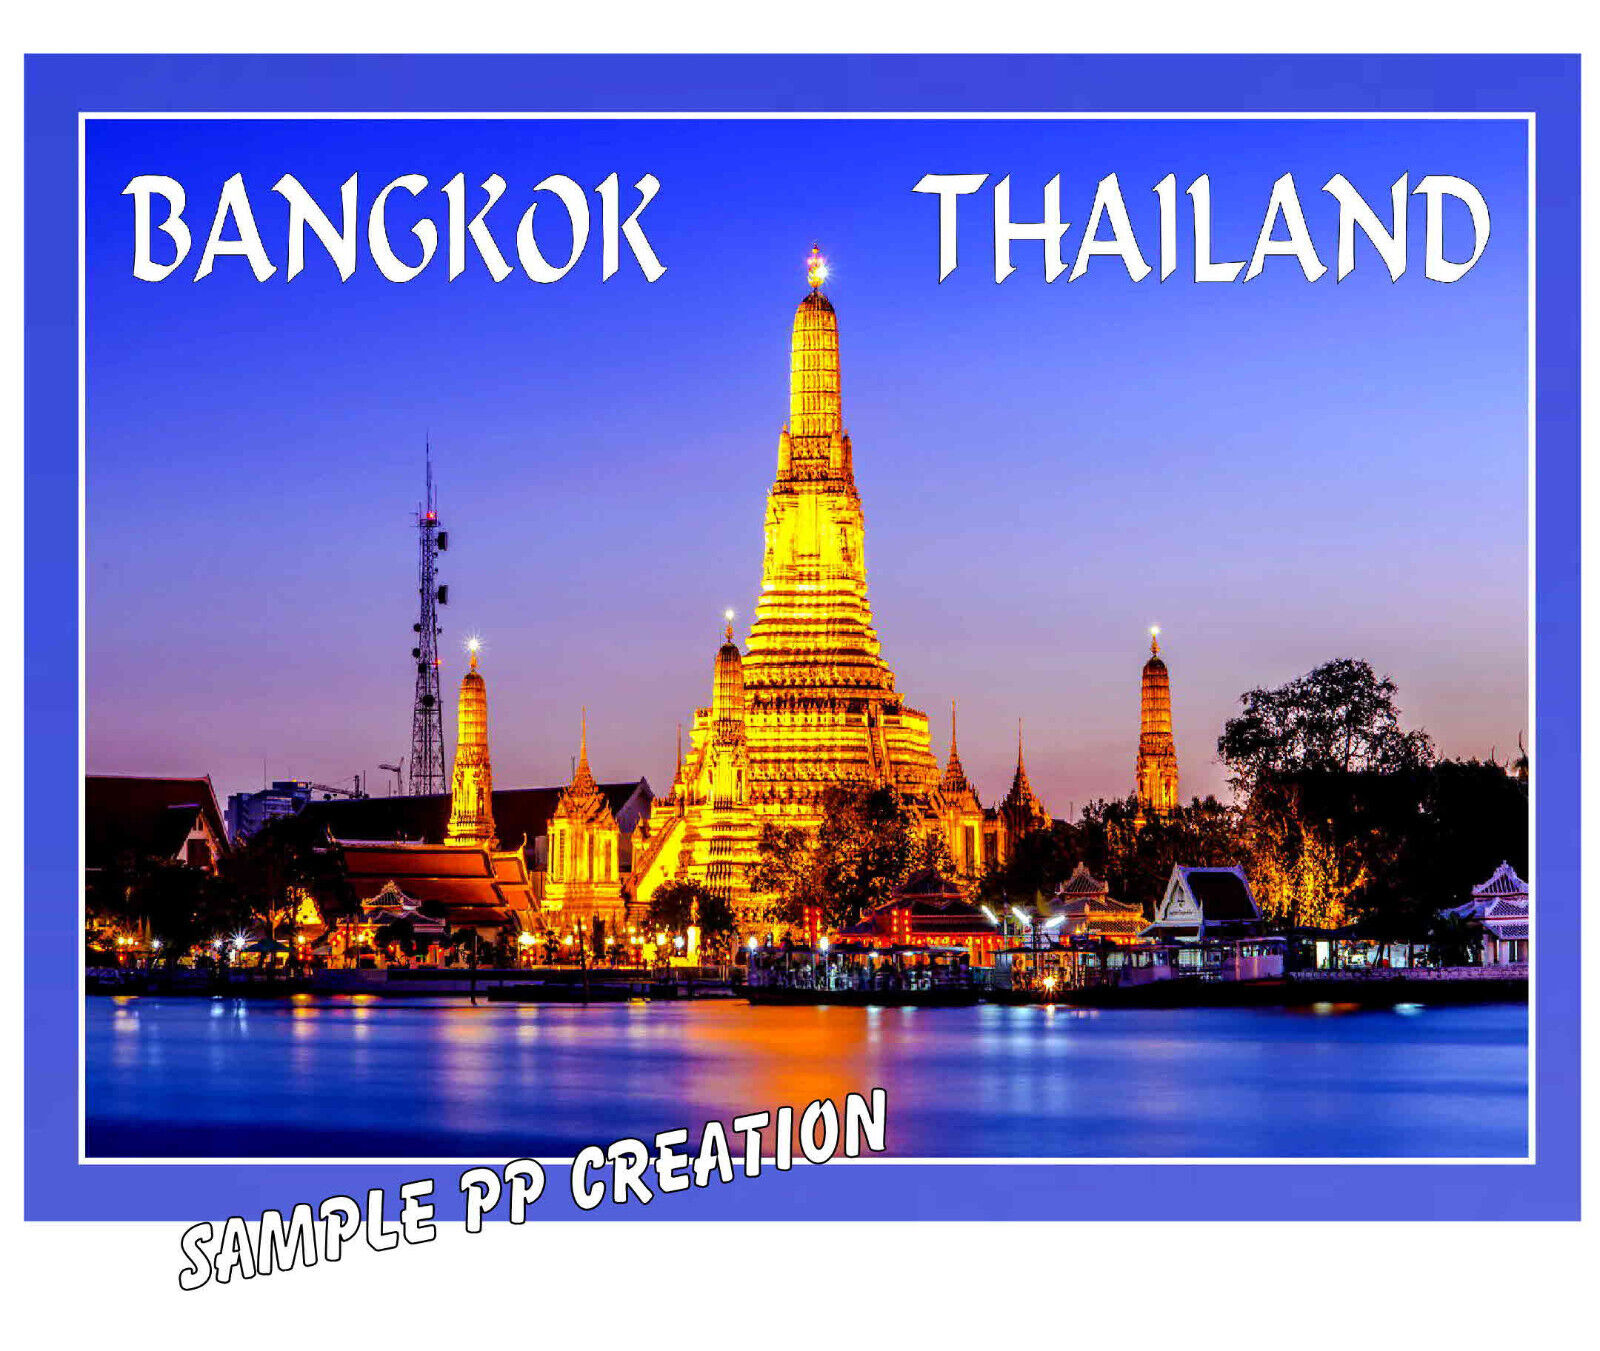 BANGKOK THAILAND photo fridge MAGNET 4 X 3 inches TRAVEL